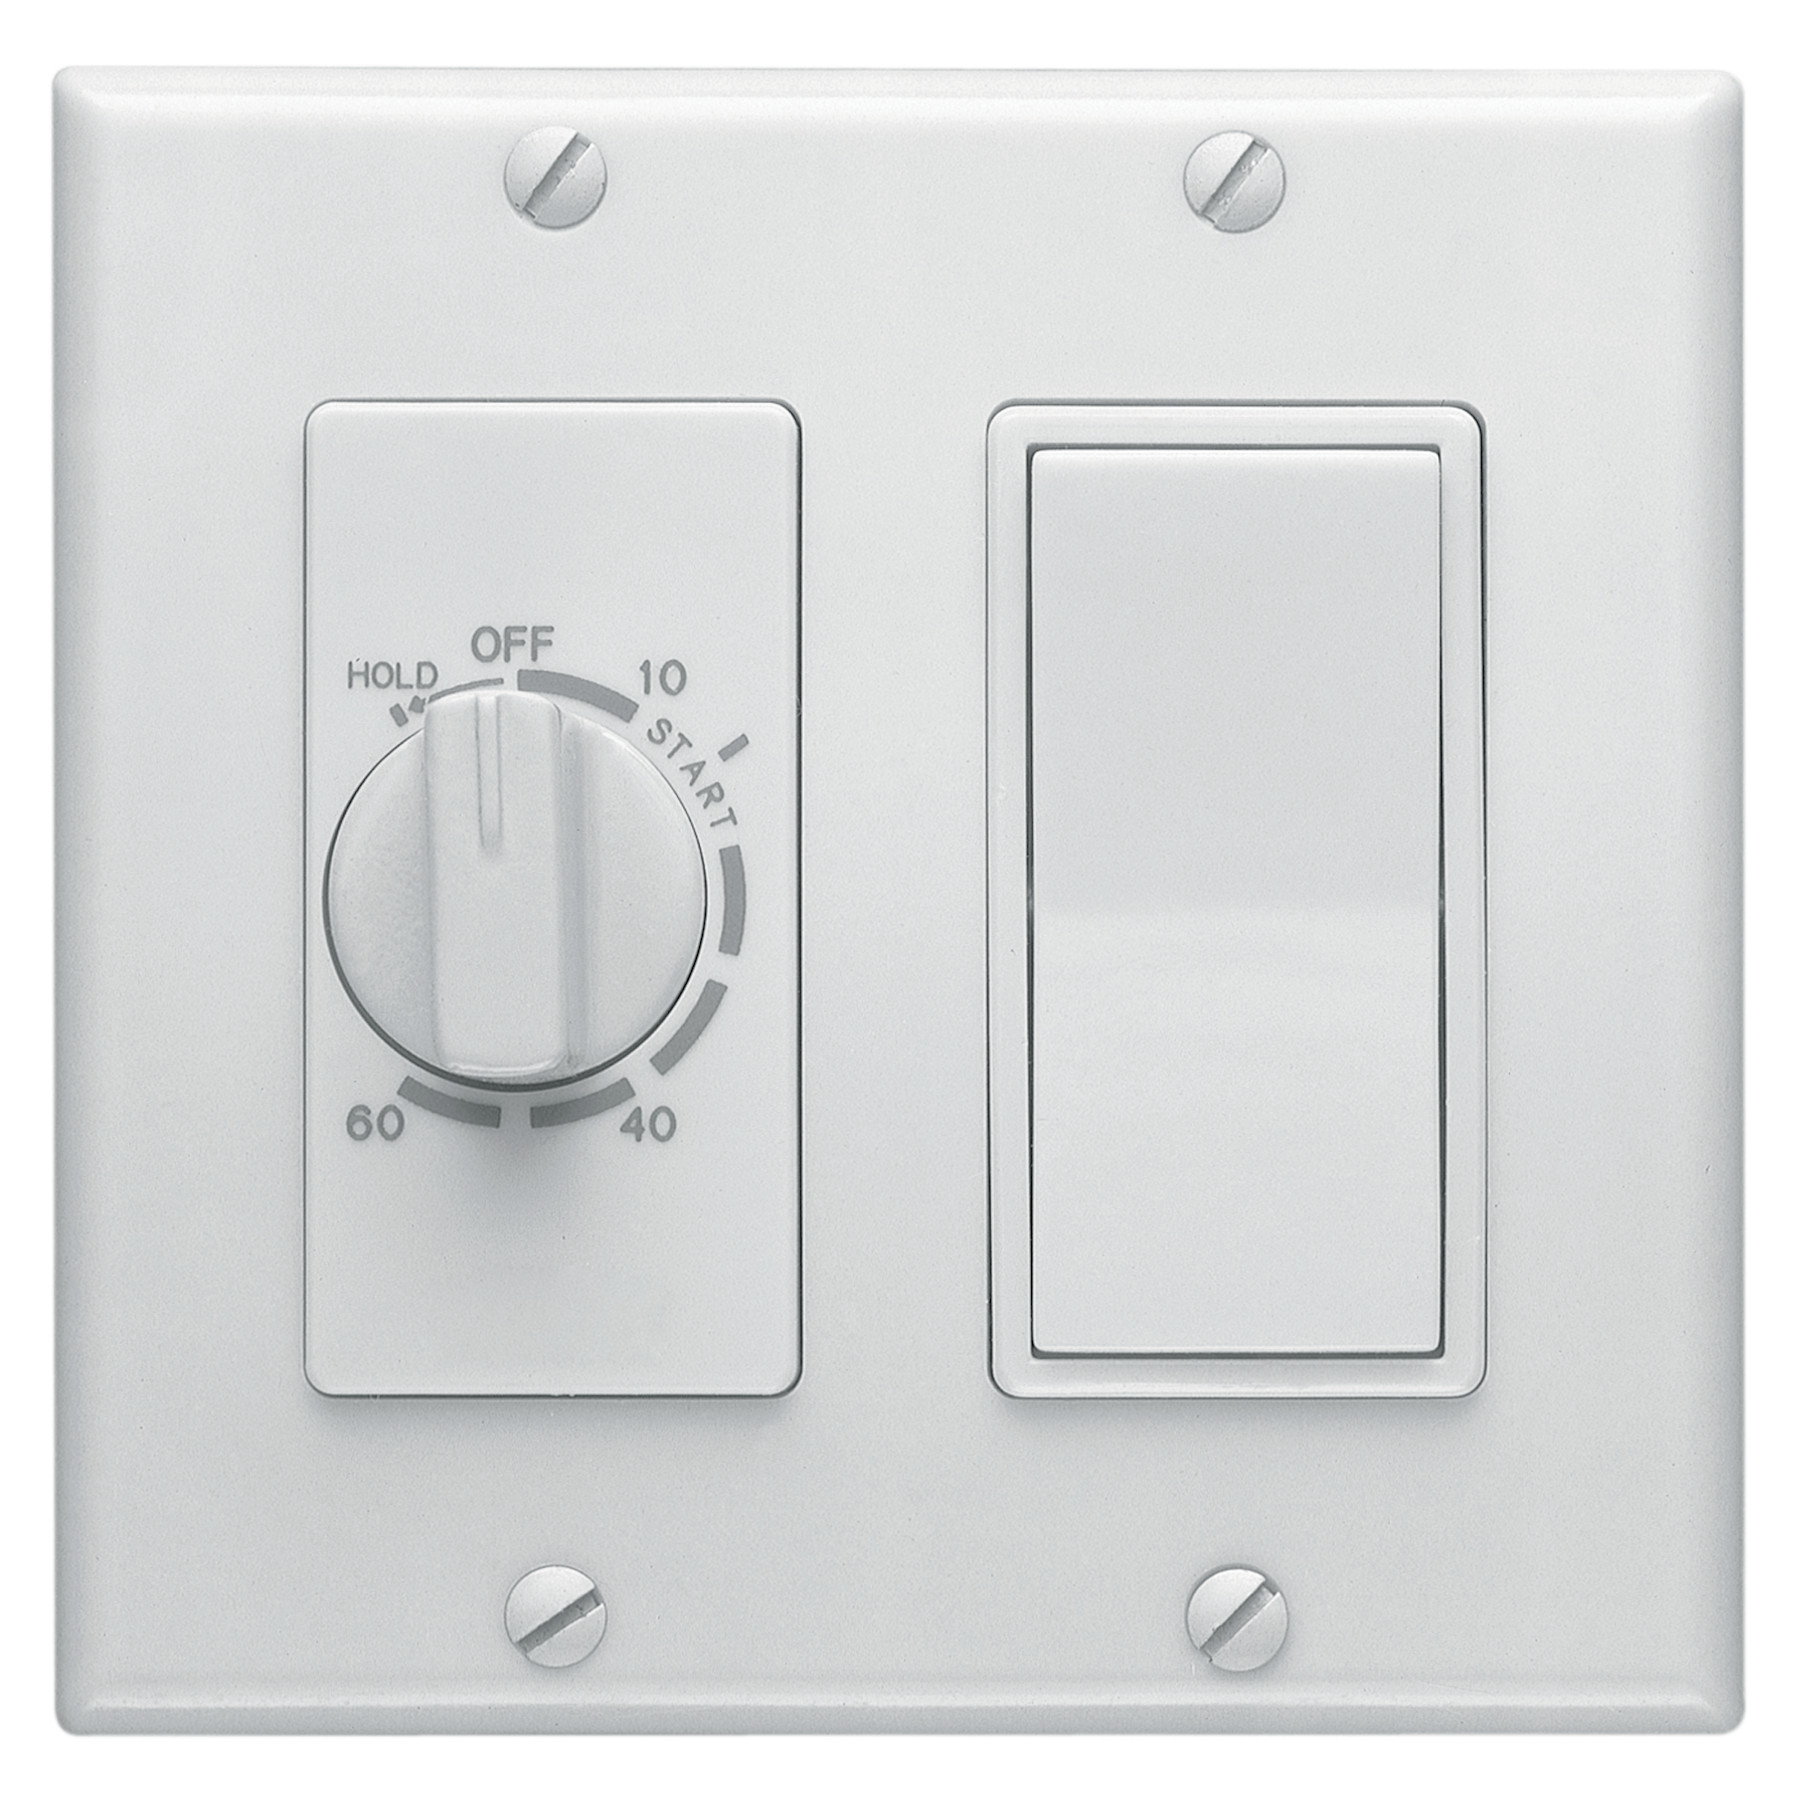 Broan-NuTone® 60-Minute Time Control w/ 1-Rocker Switch, White